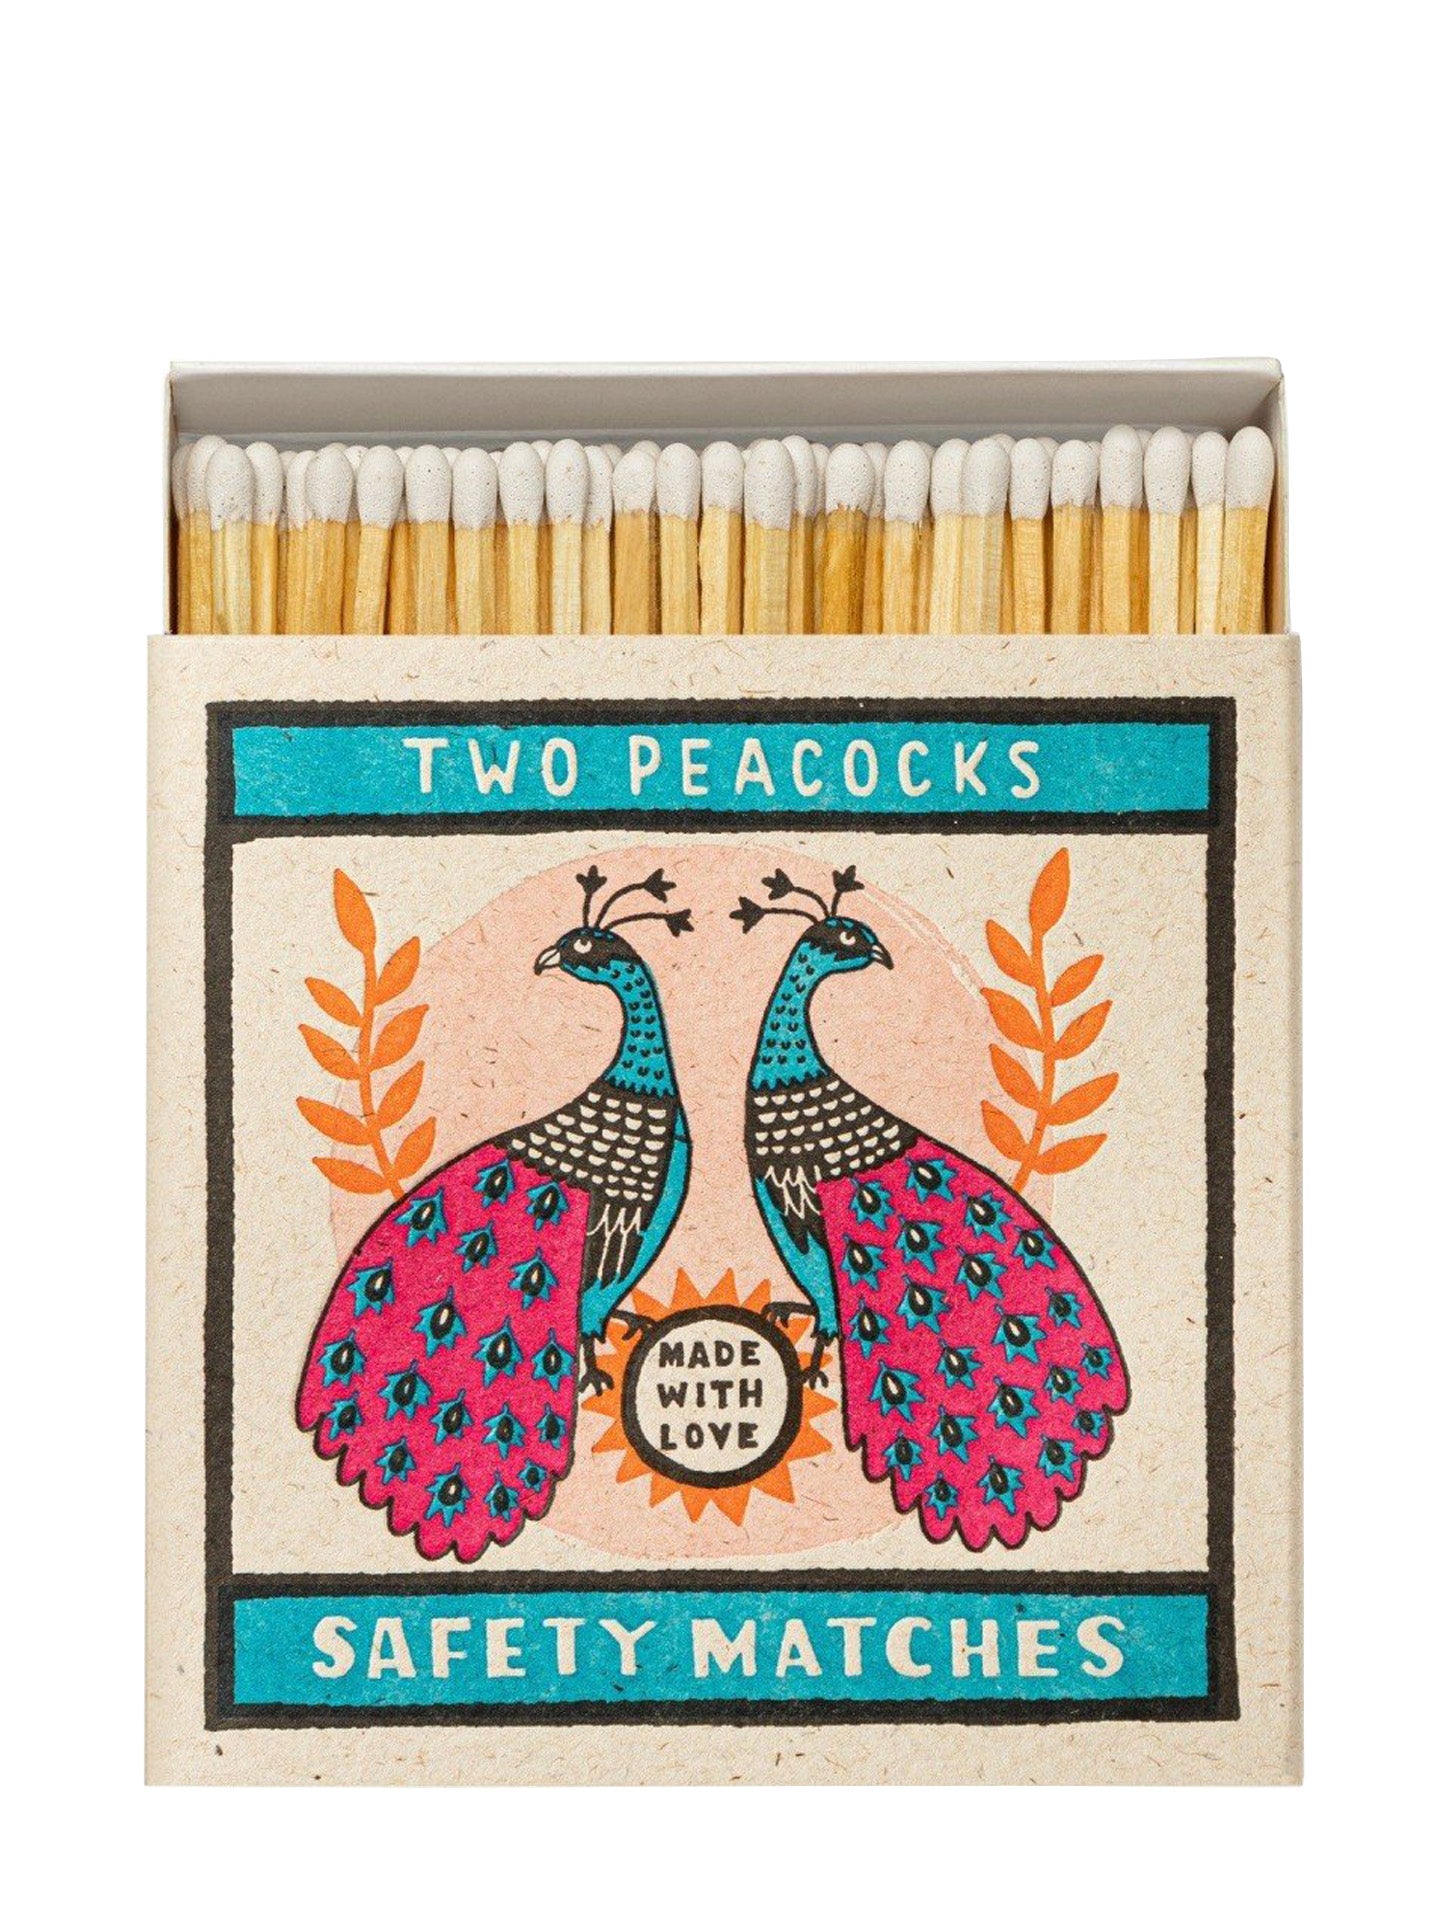 Two Peacocks matchbox